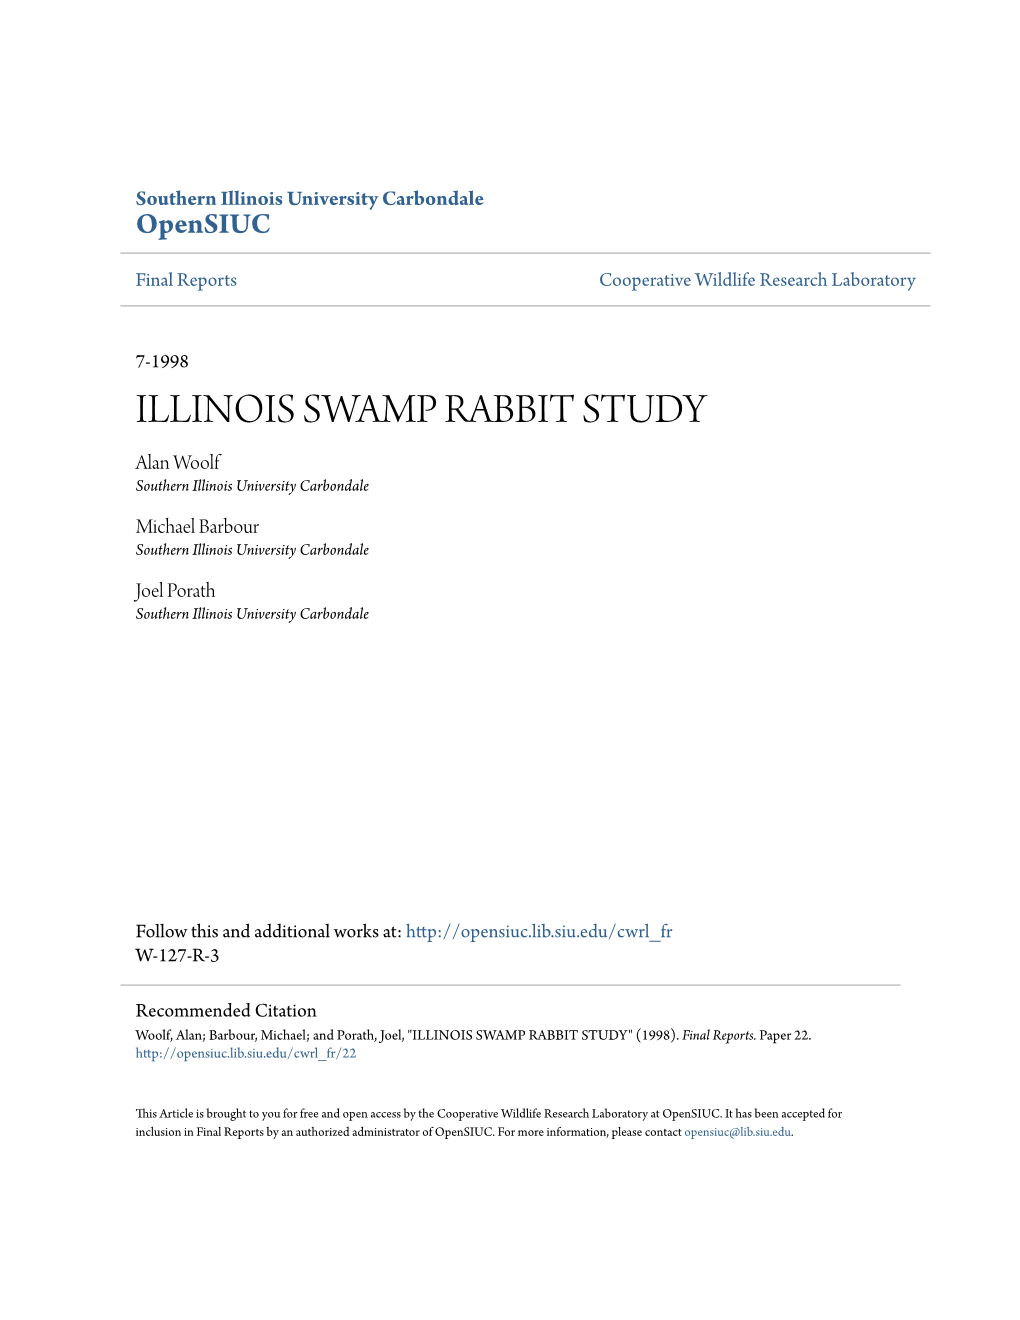 Illinois Swamp Rabbit Study